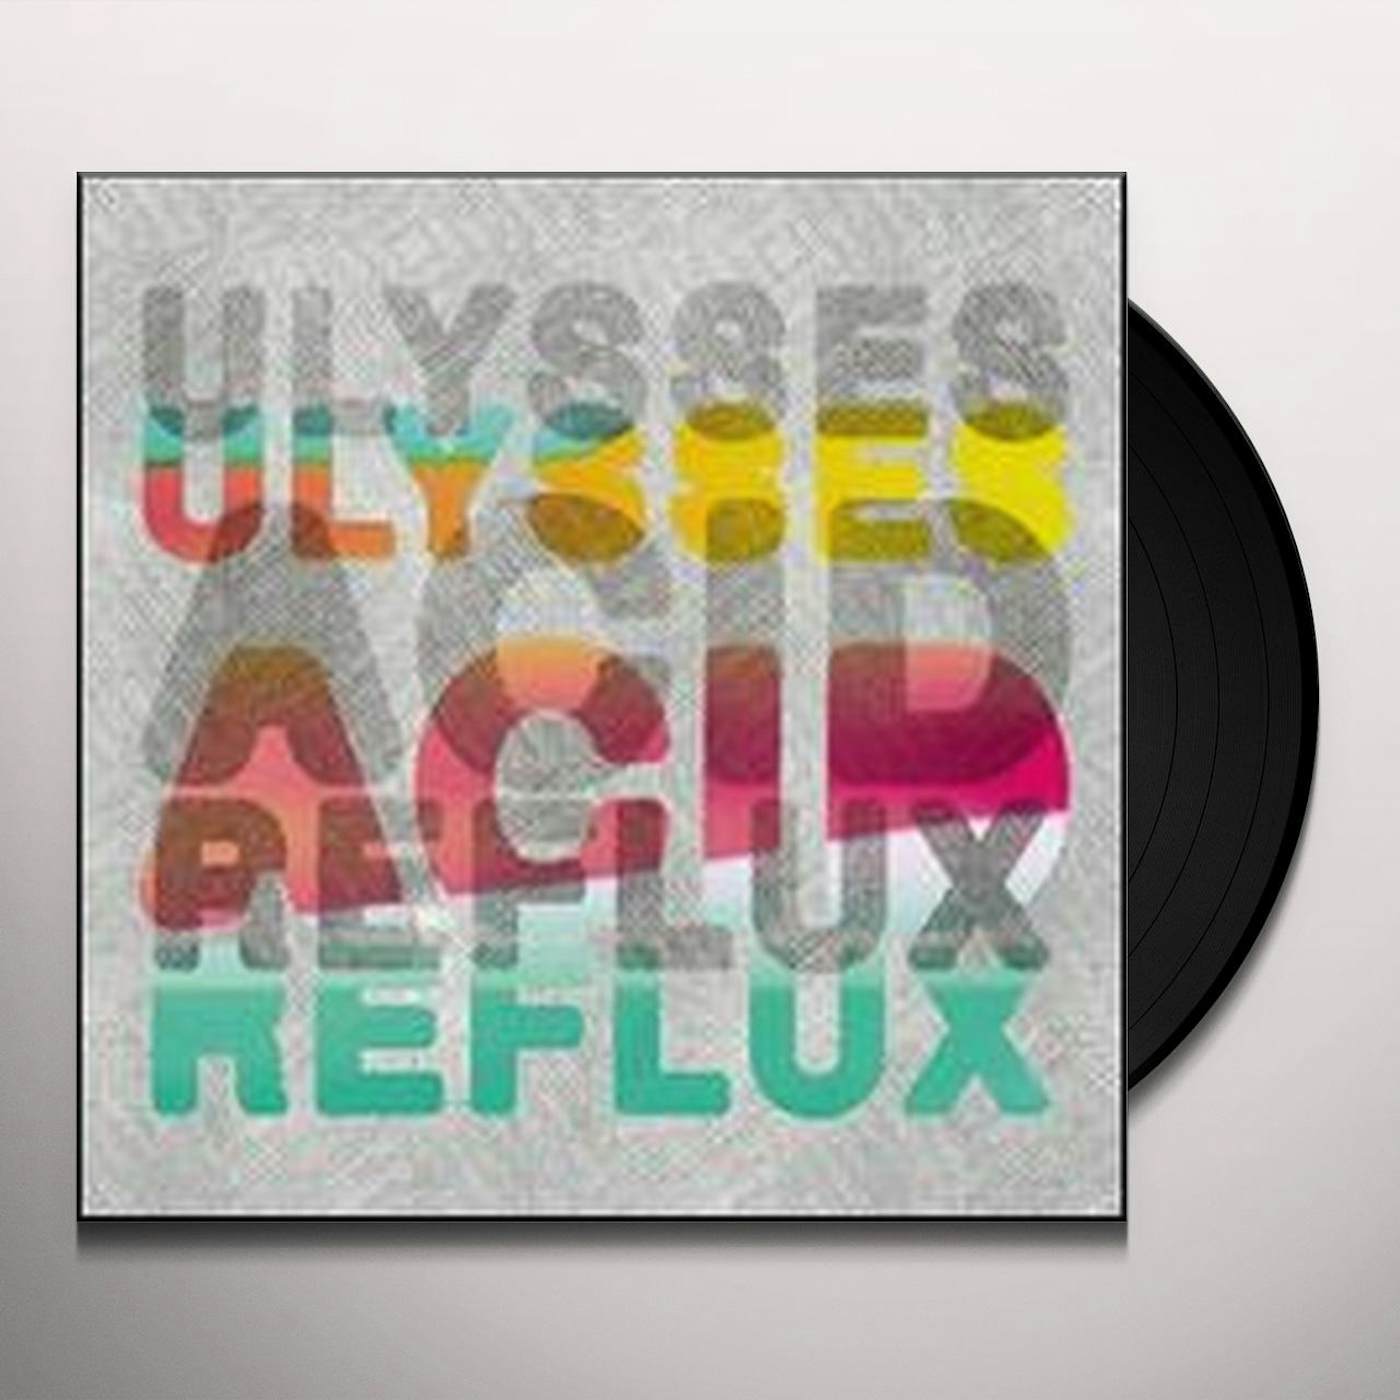 ULYSSES ACID REFLUX Vinyl Record